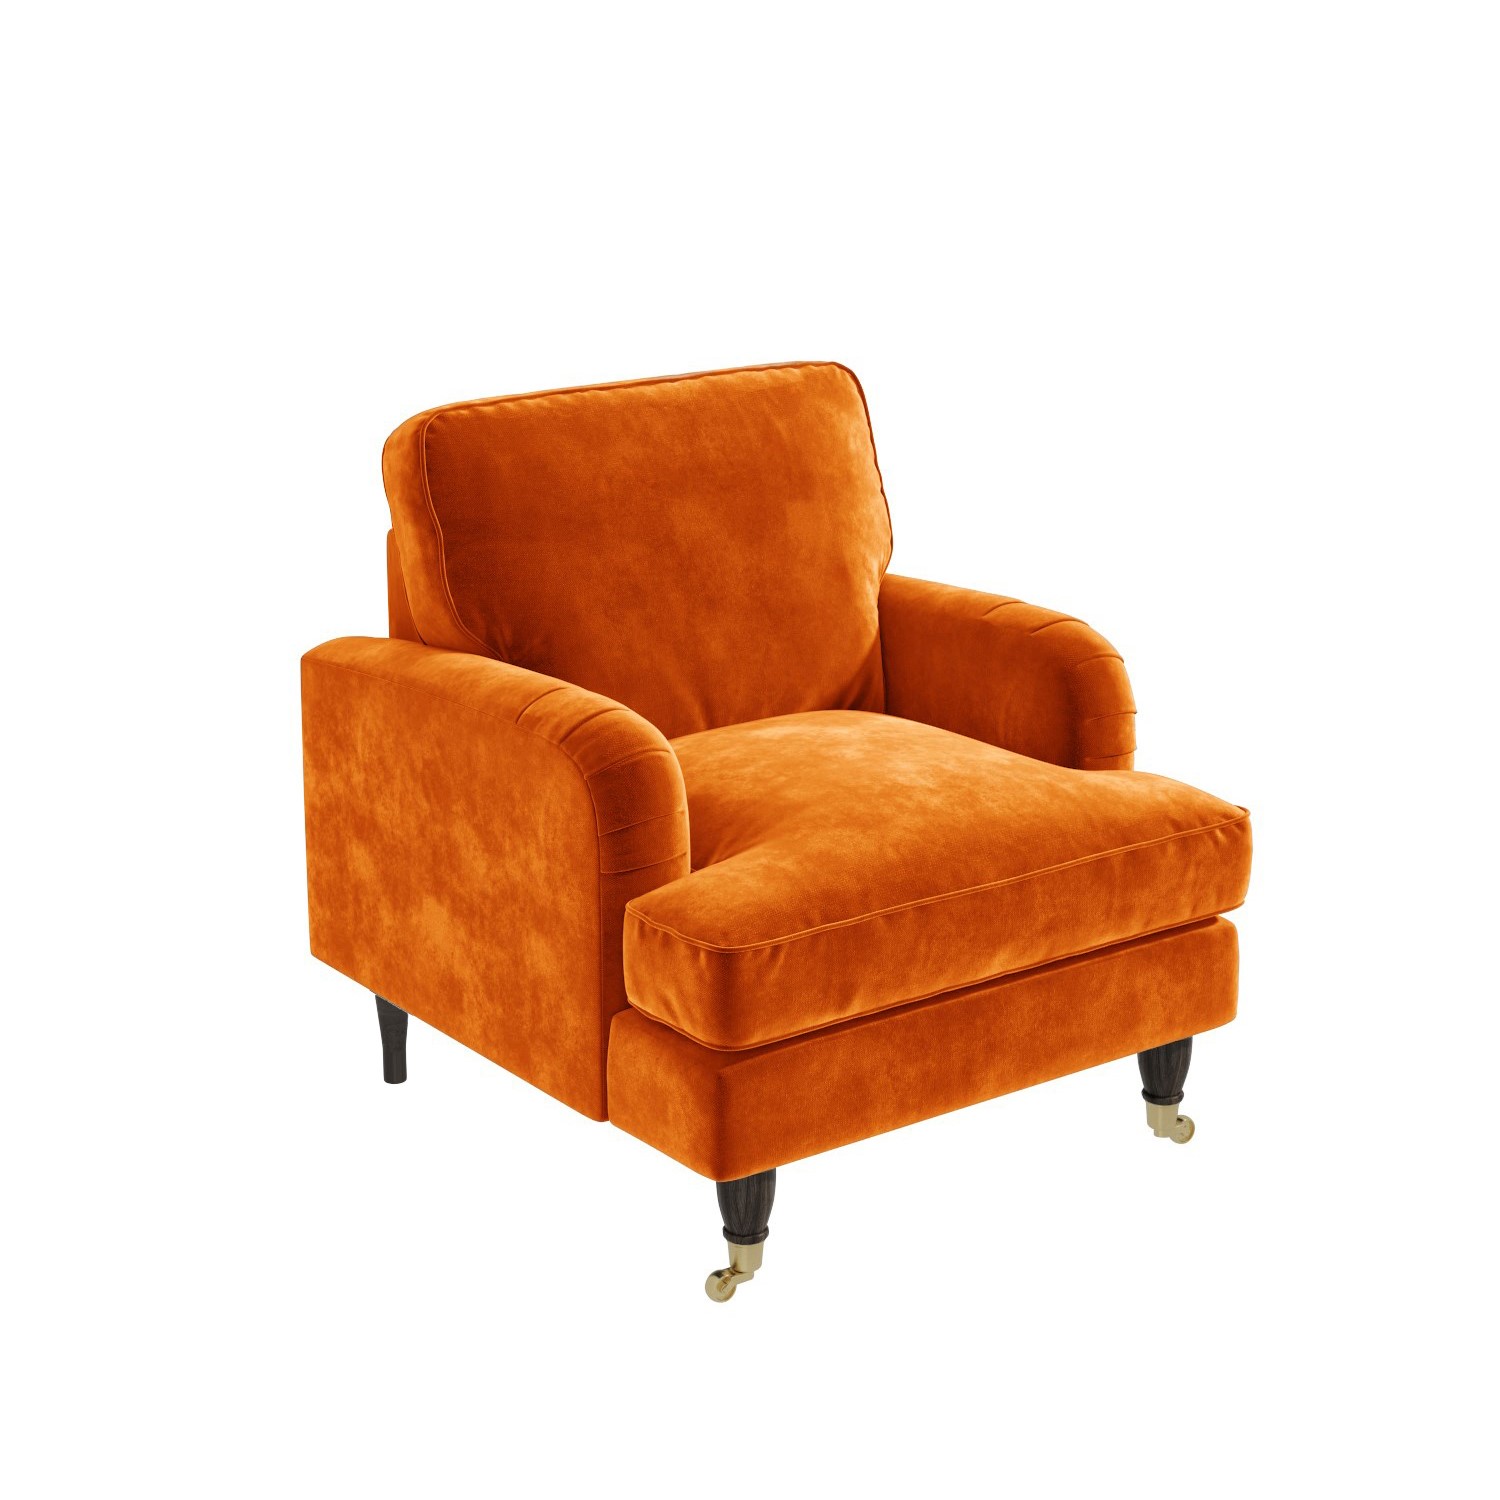 Read more about Orange velvet armchair payton